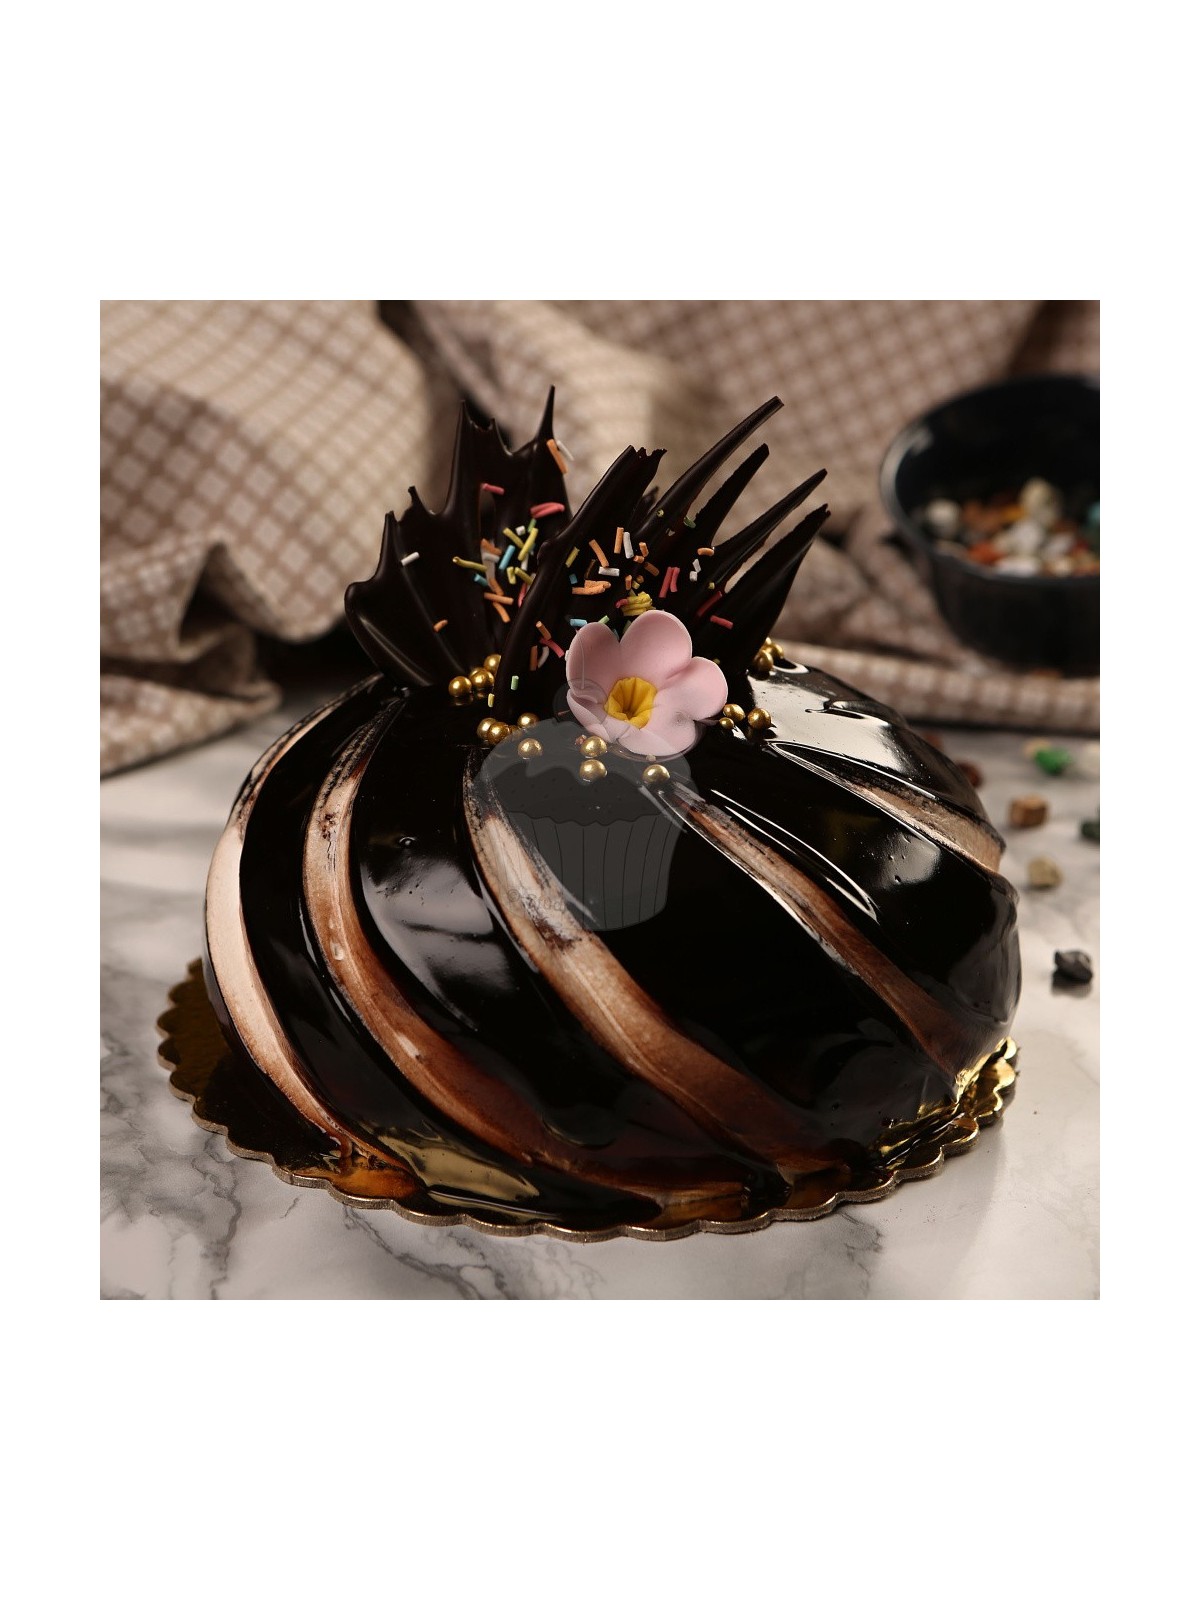 MIRALL - Hochglanz-Glasur - Dunkler Schokolade - Cioccolato Fonden - 250g